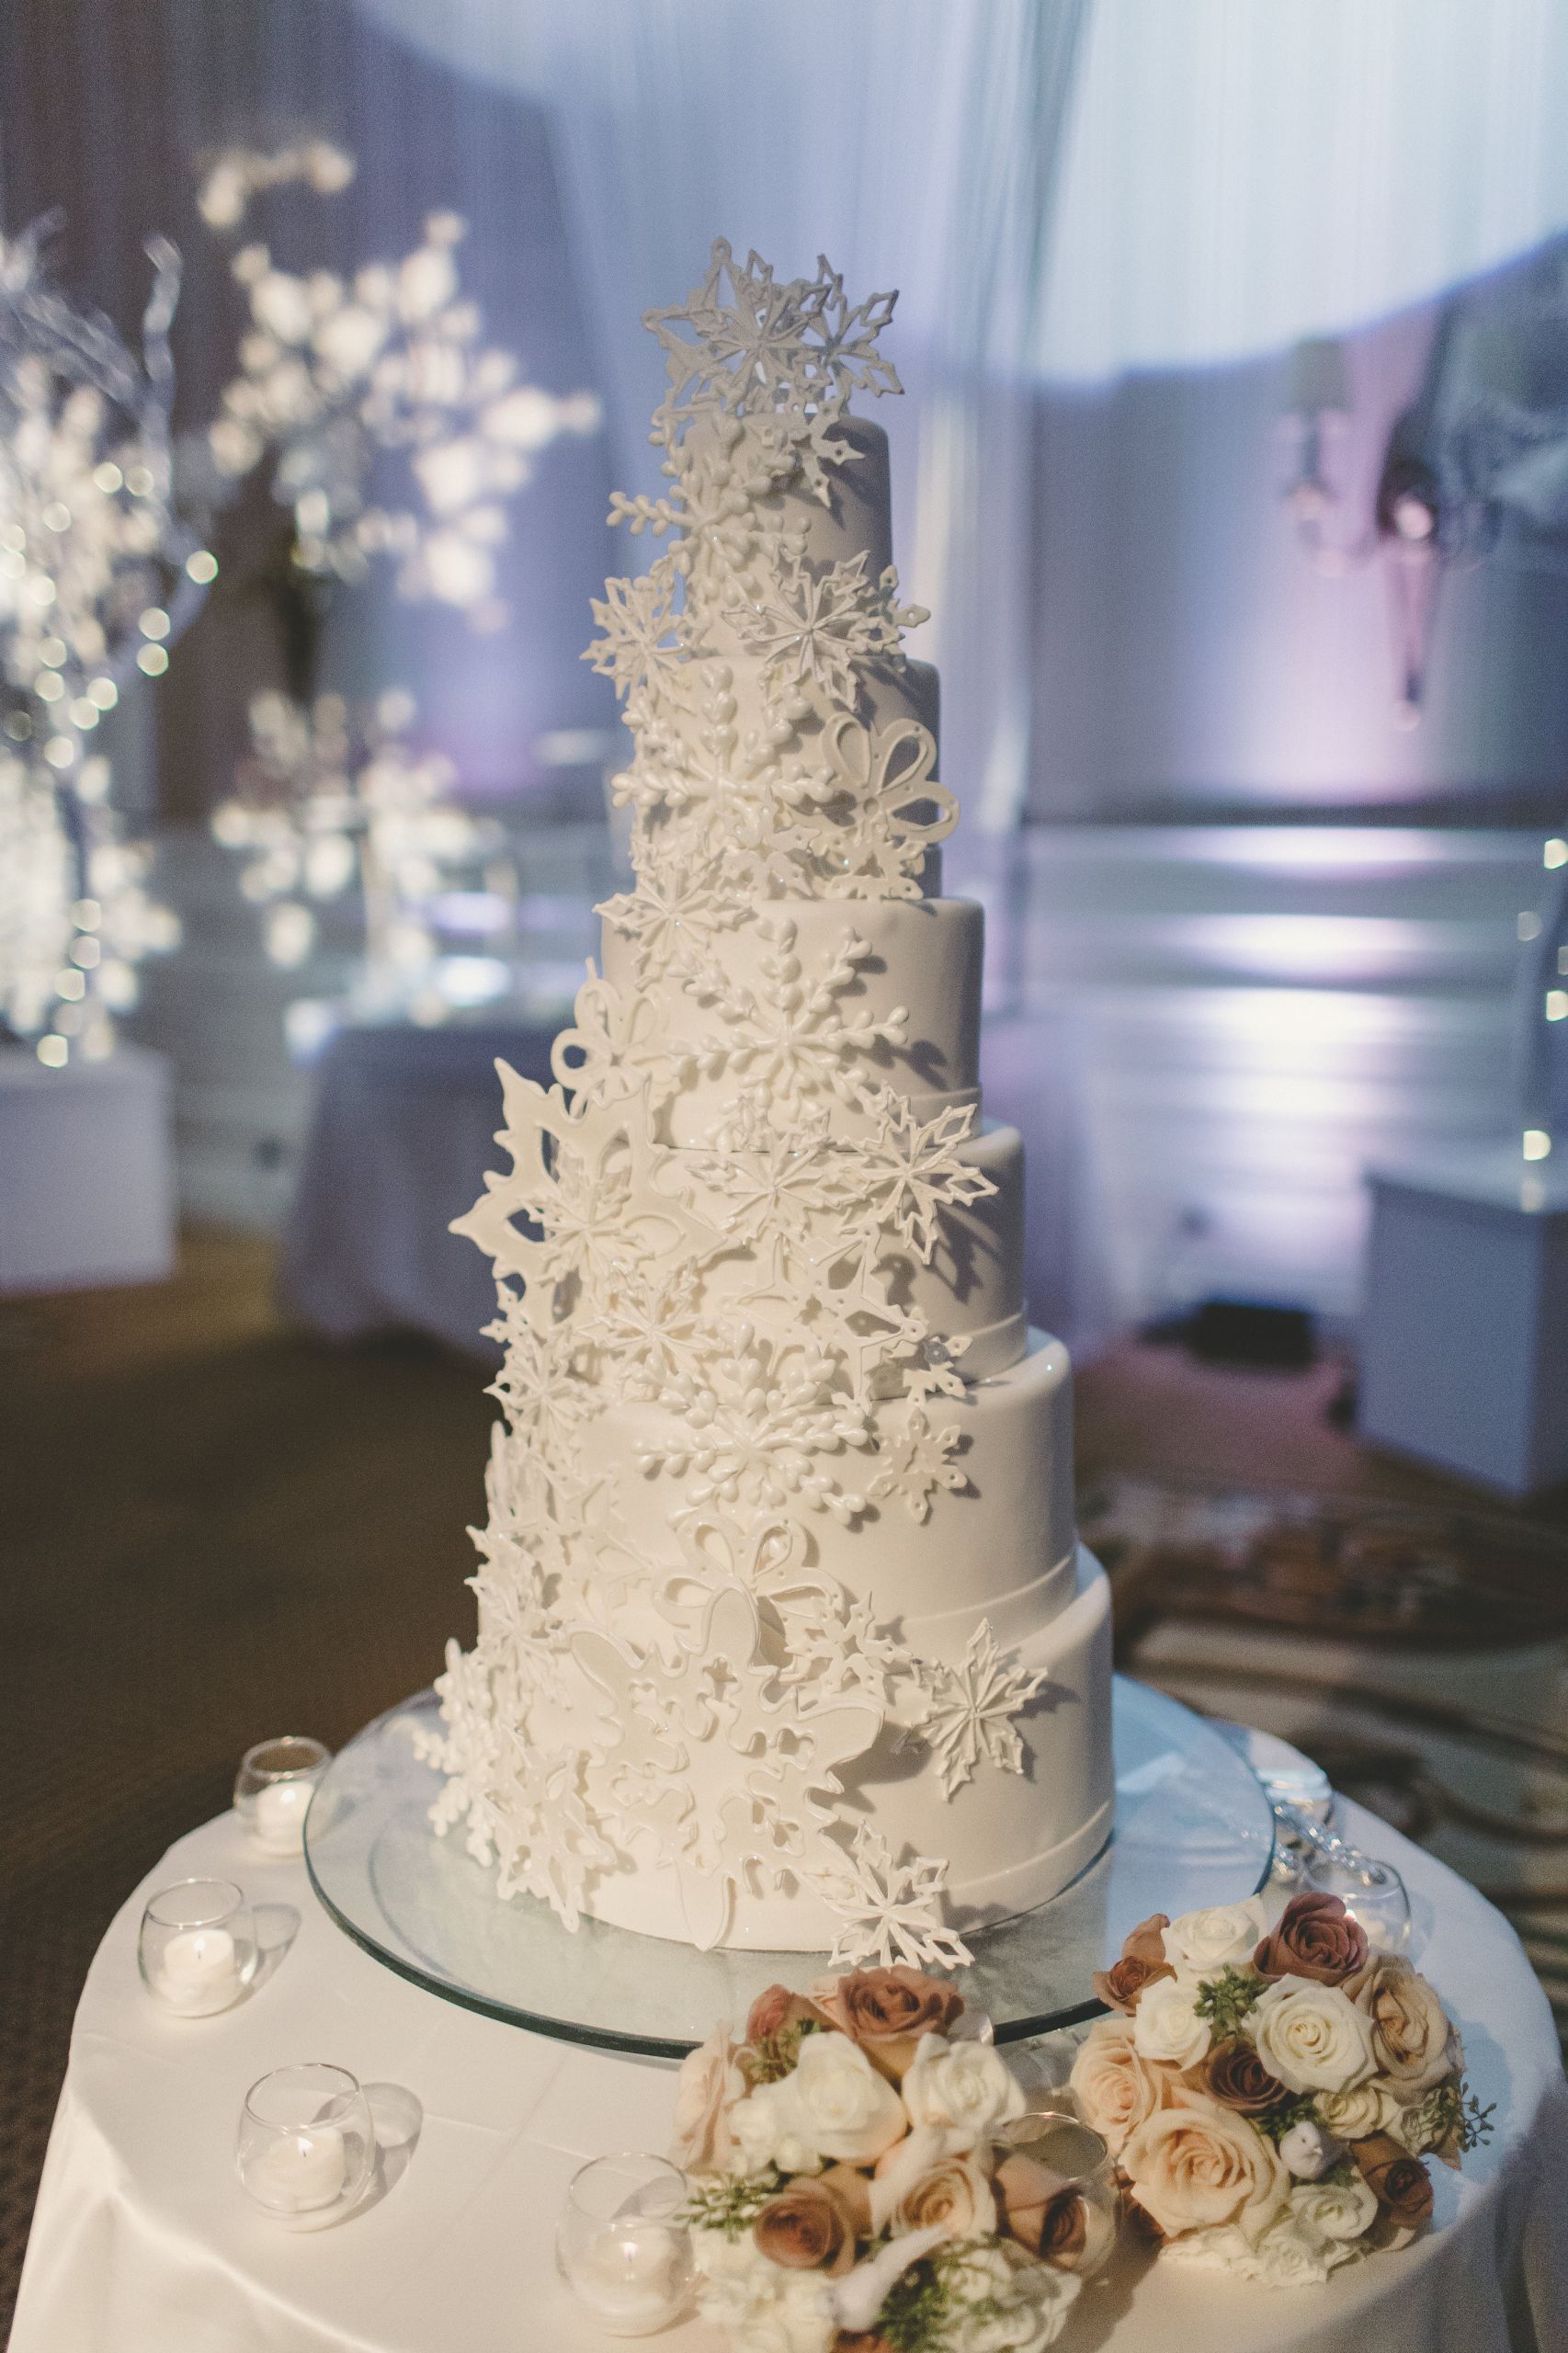 Winter Wonderland Wedding Cakes
 NEED HELP LADIES – Winter Wonderland Themed Wedding